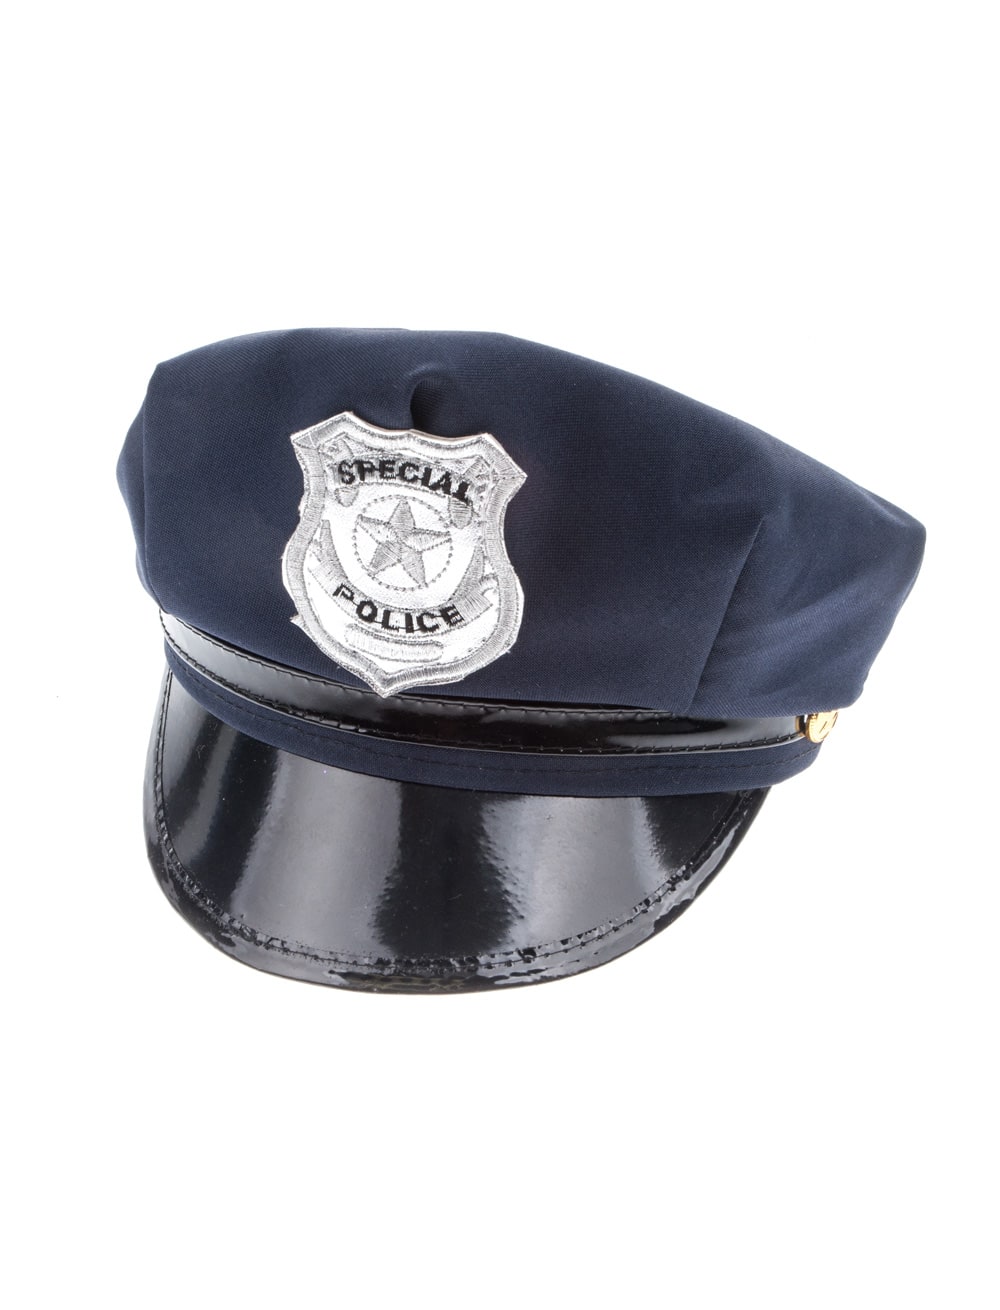 Polizeimütze Amerika dunkelblau 54